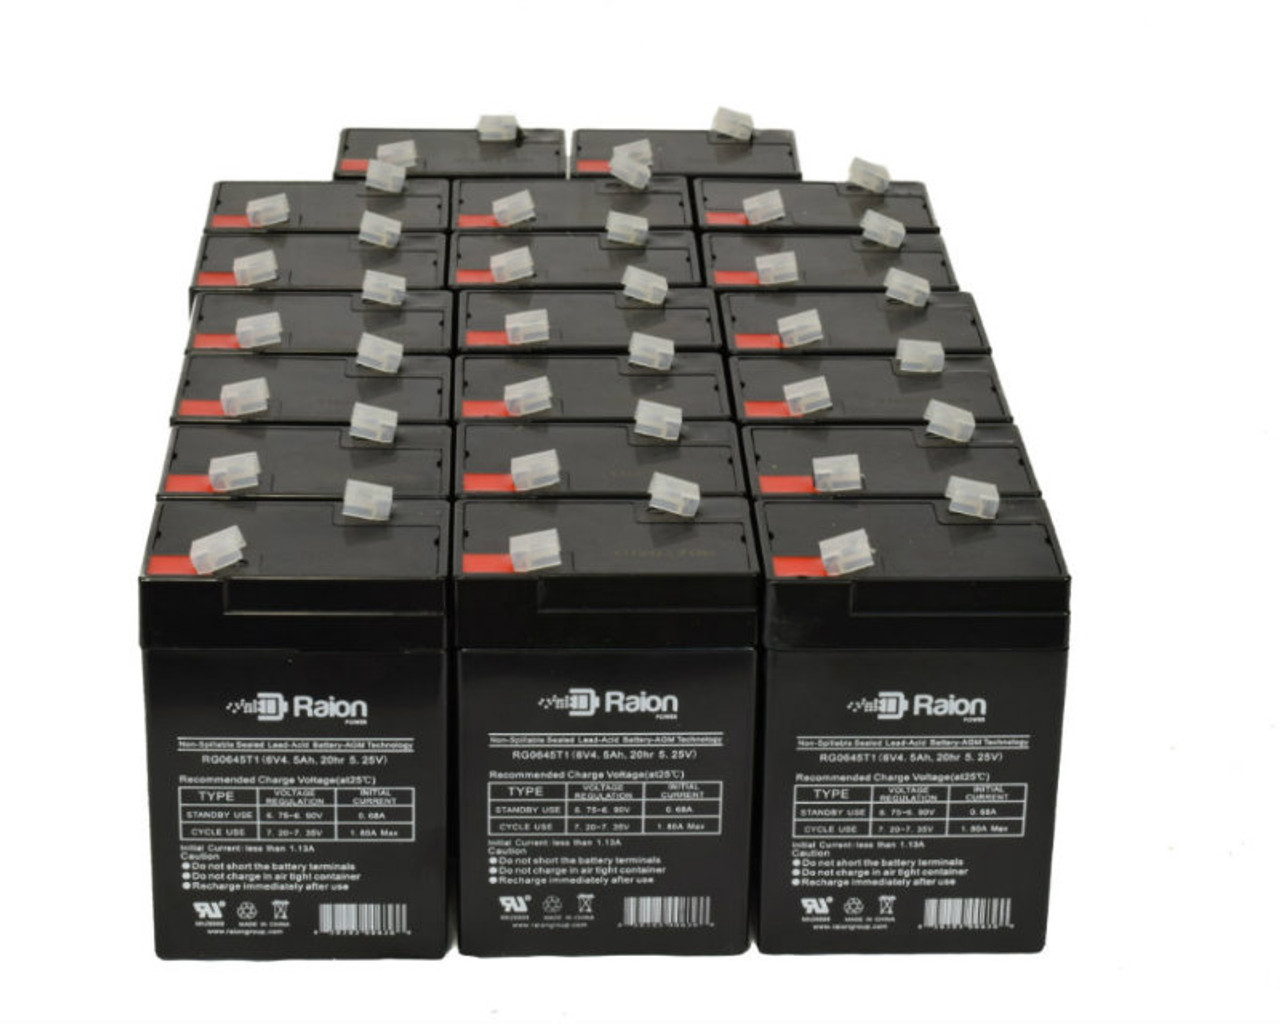 Raion Power 6 Volt 4.5Ah RG0645T1 Replacement Battery for Neuton Power NP645 - 20 Pack